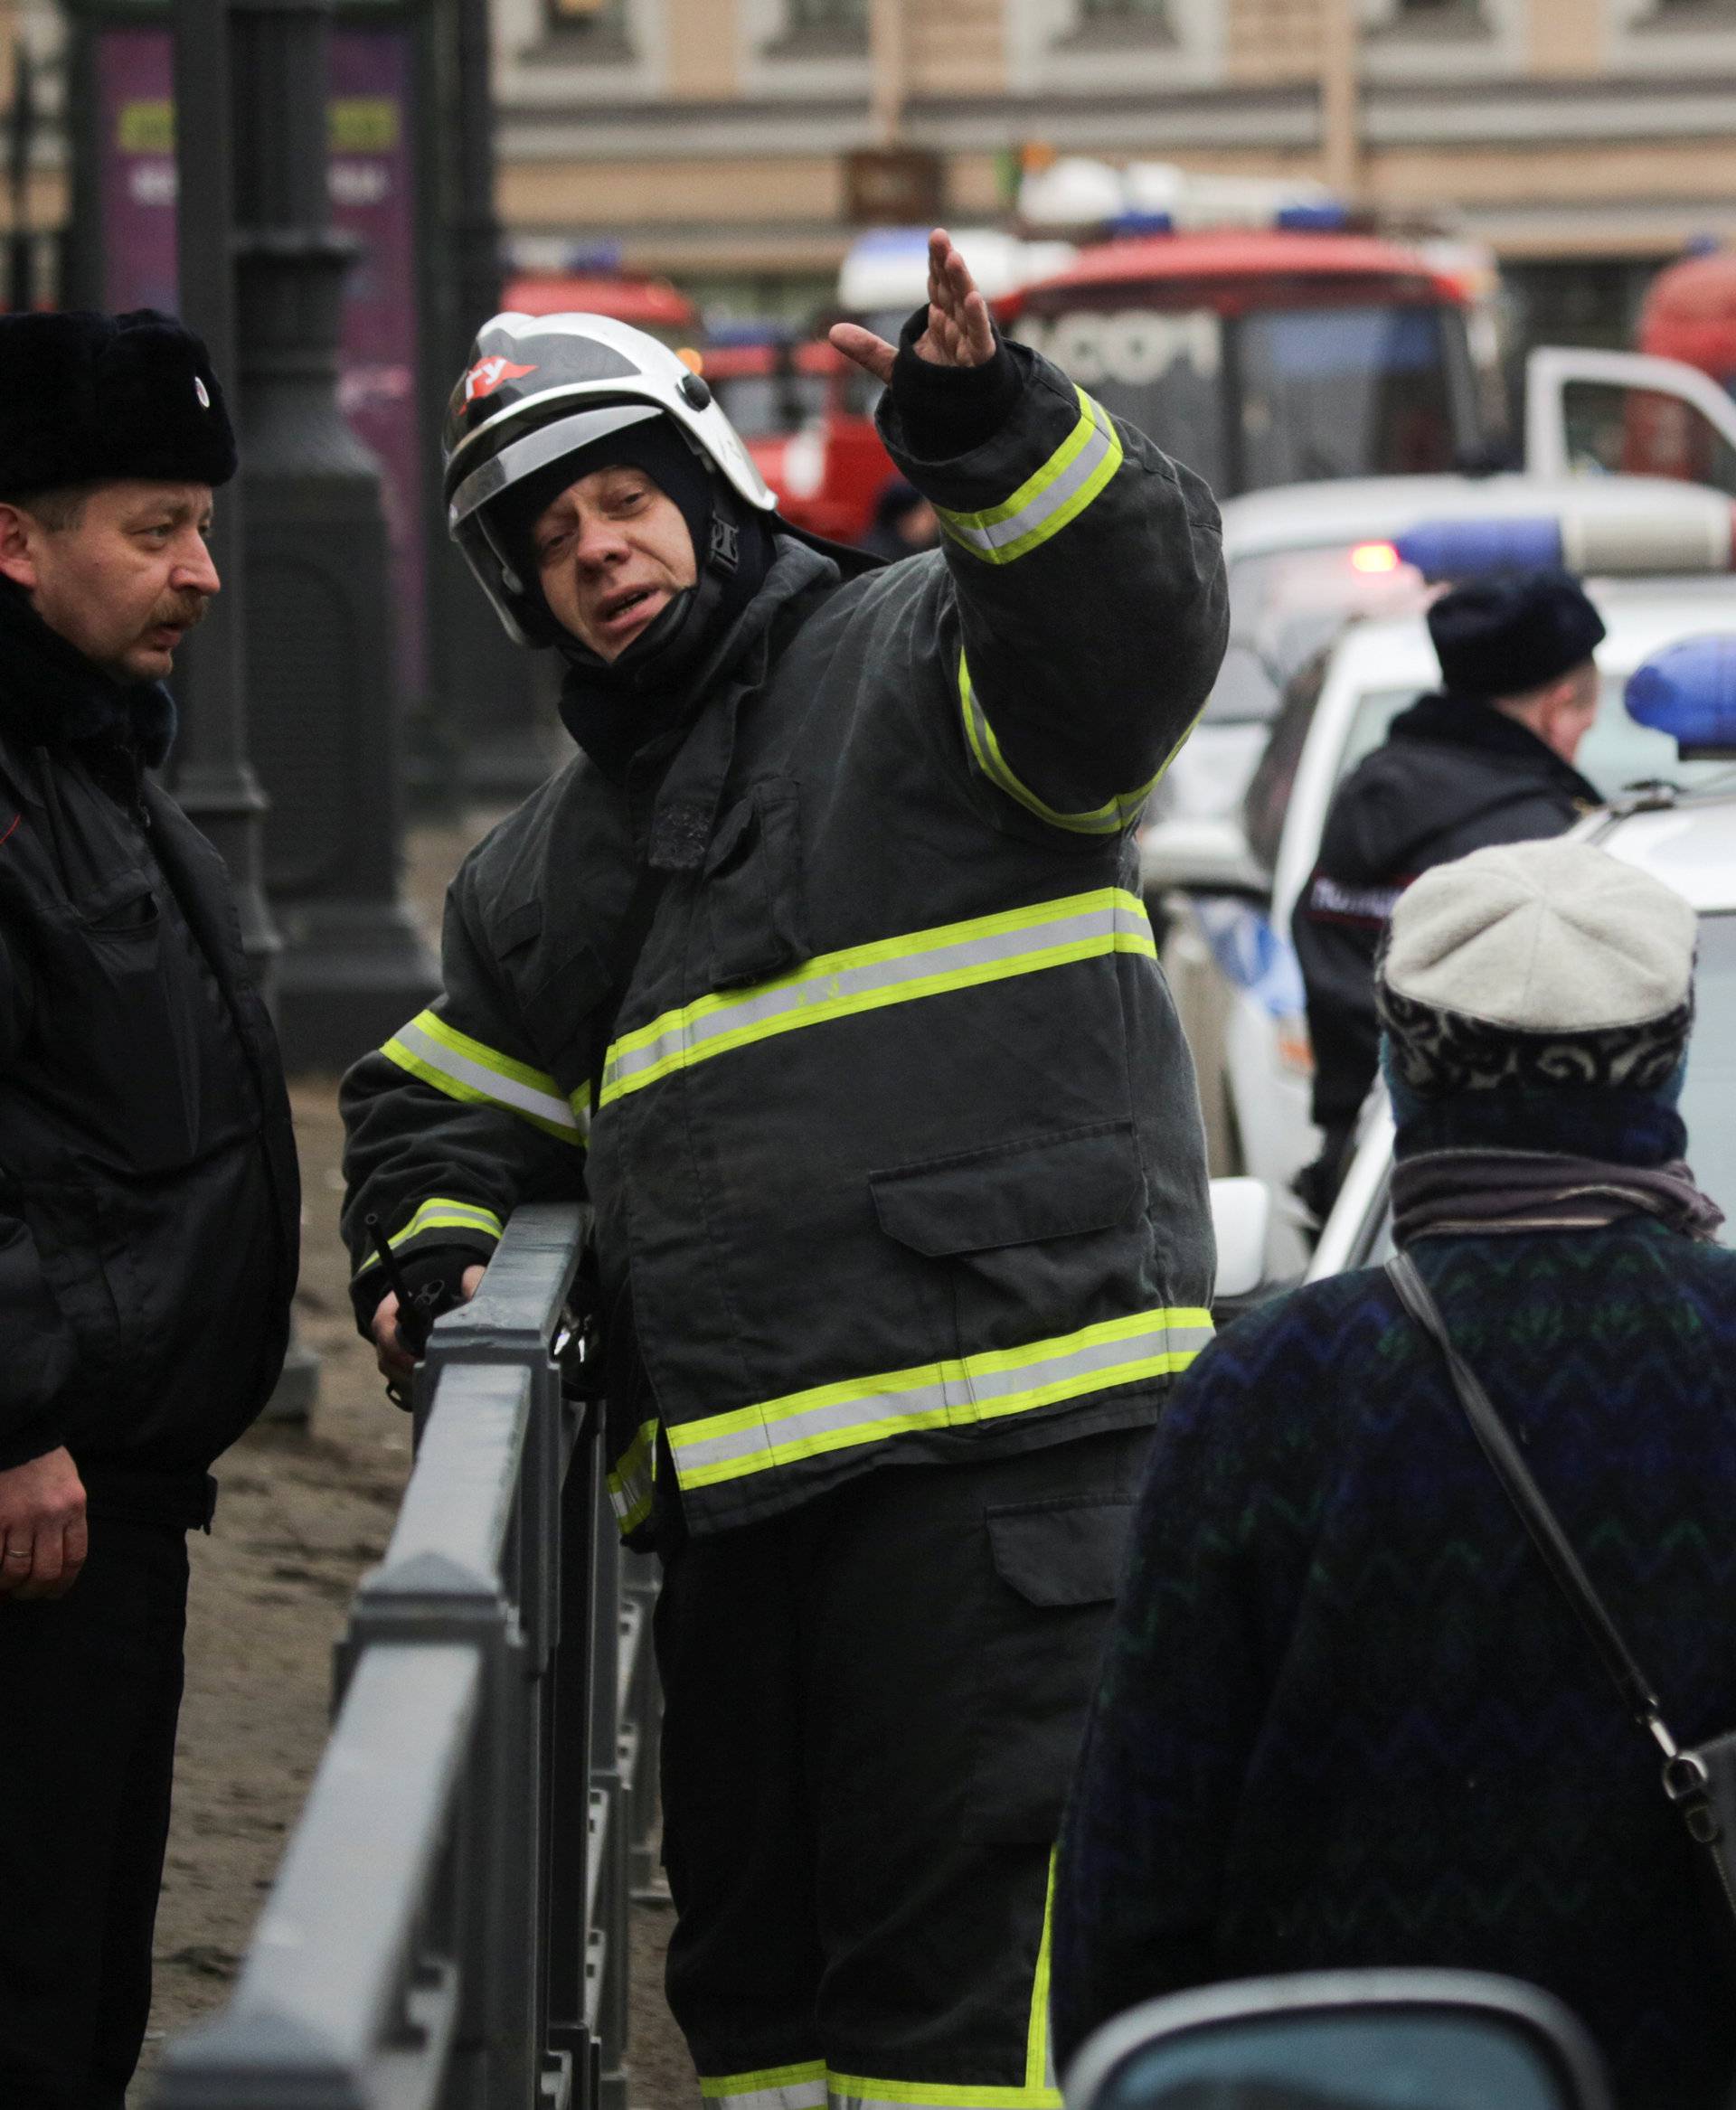 Emergency services direct pedestrians outside Sennaya Ploshchad metro station following explosions in St. Petersburg